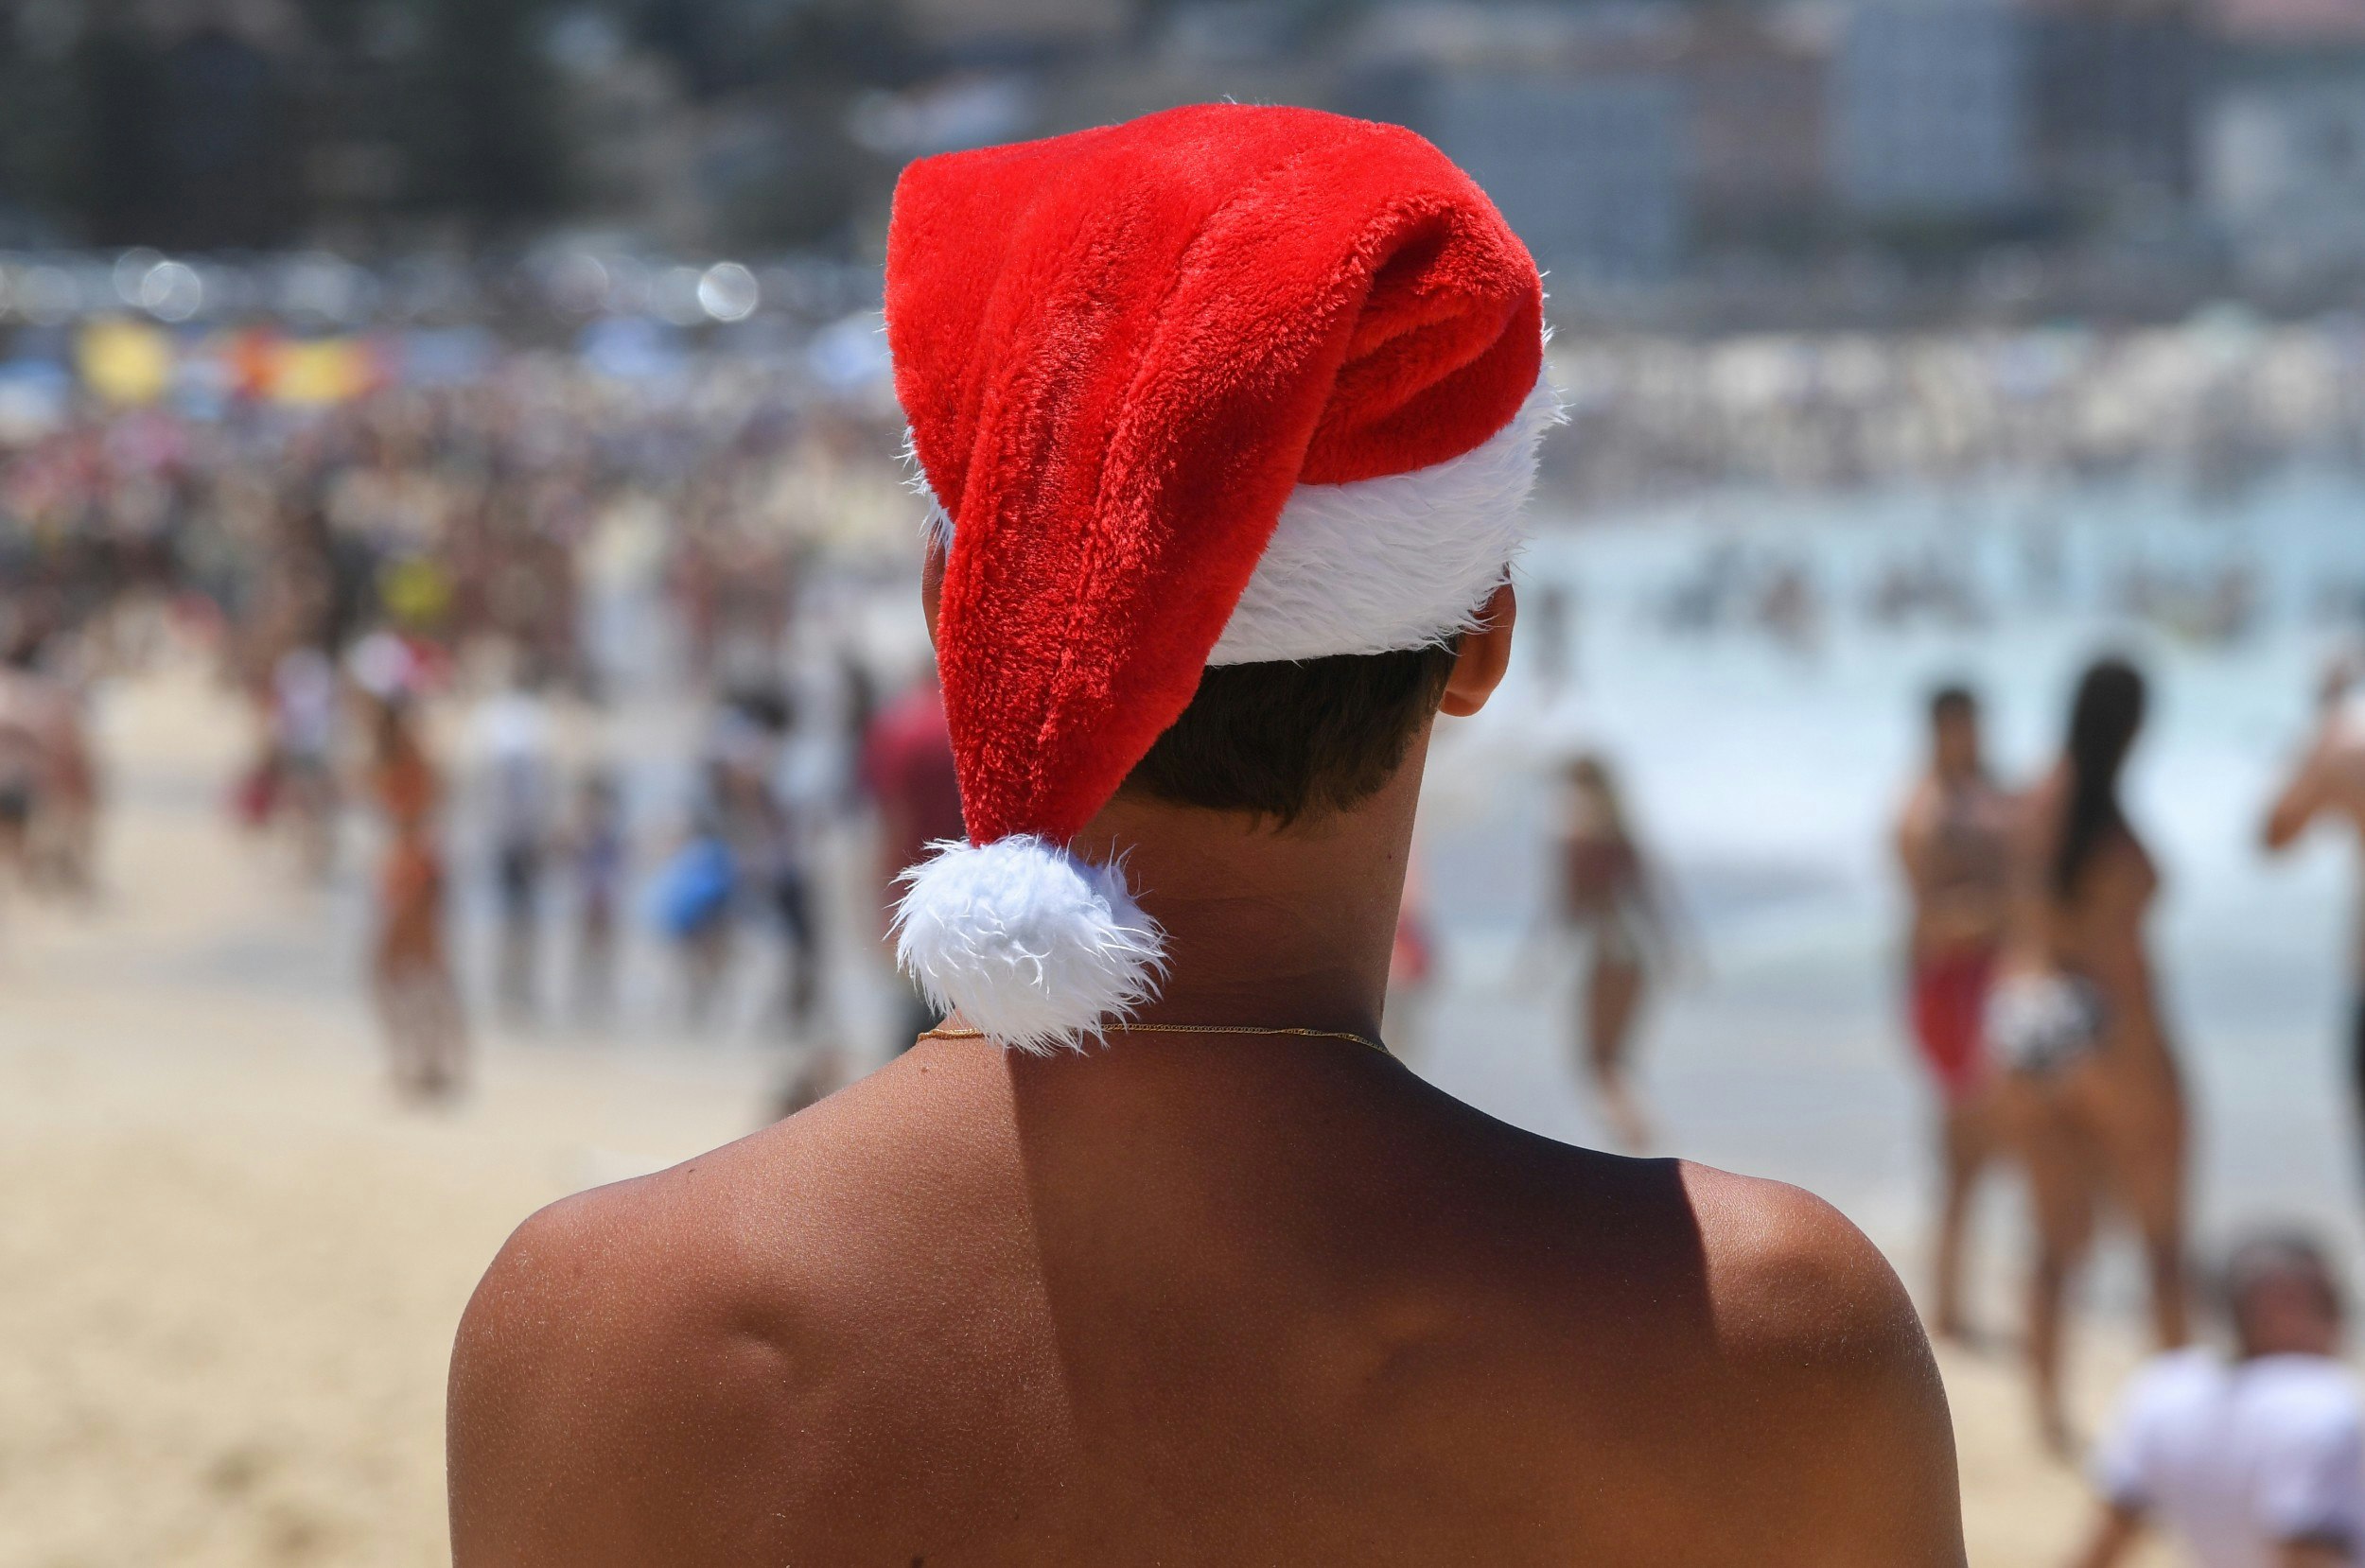  A man wearing a Santa hat on a beach